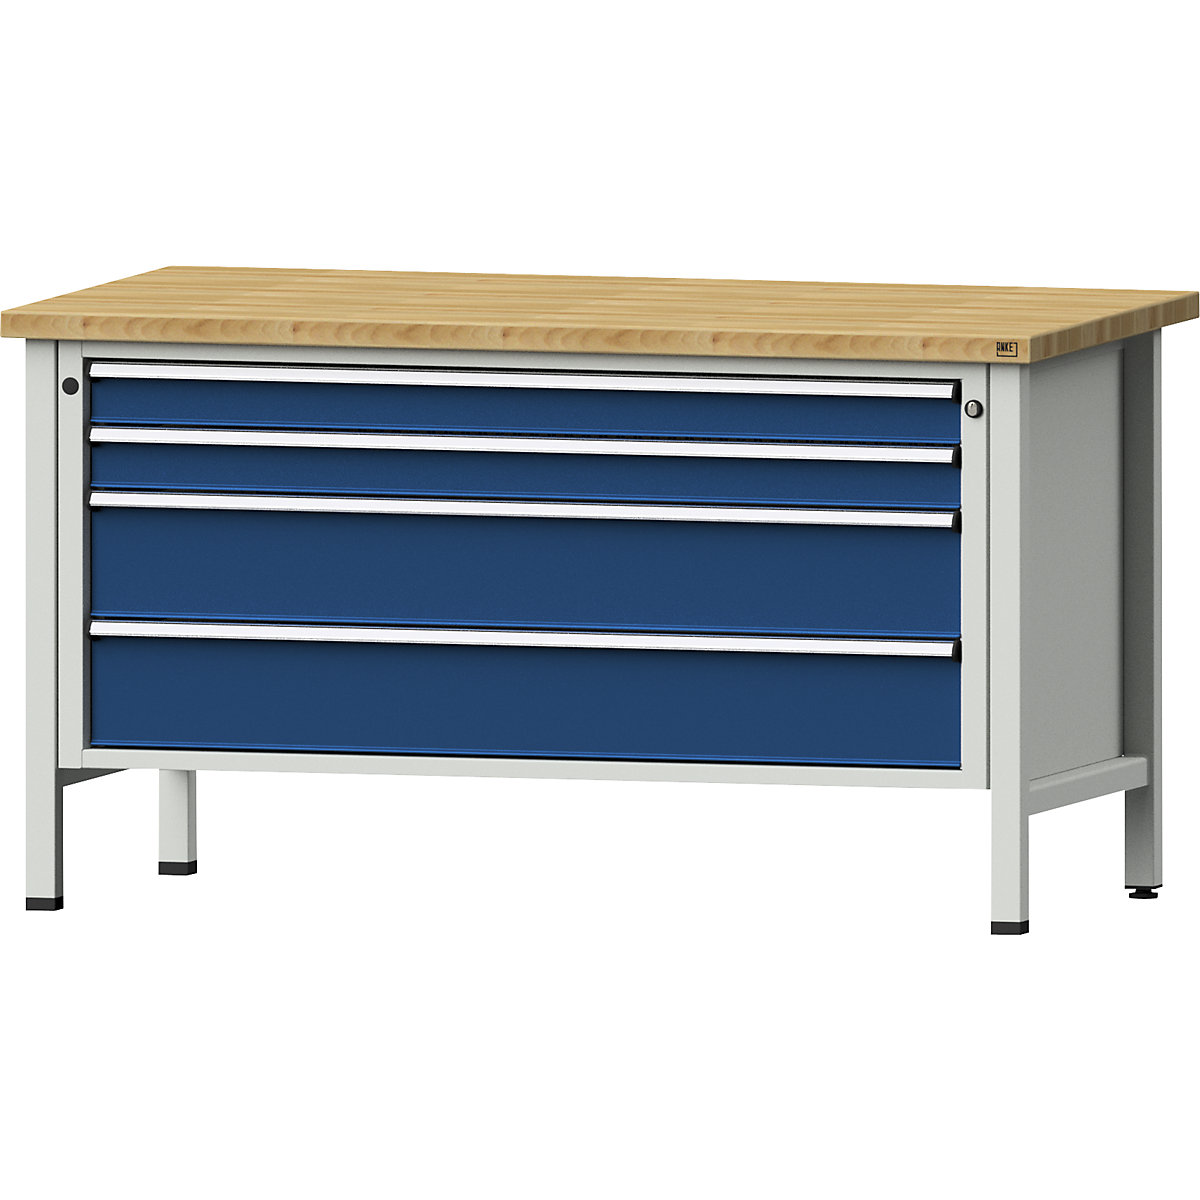 Workbench with XL/XXL drawers, frame construction - ANKE